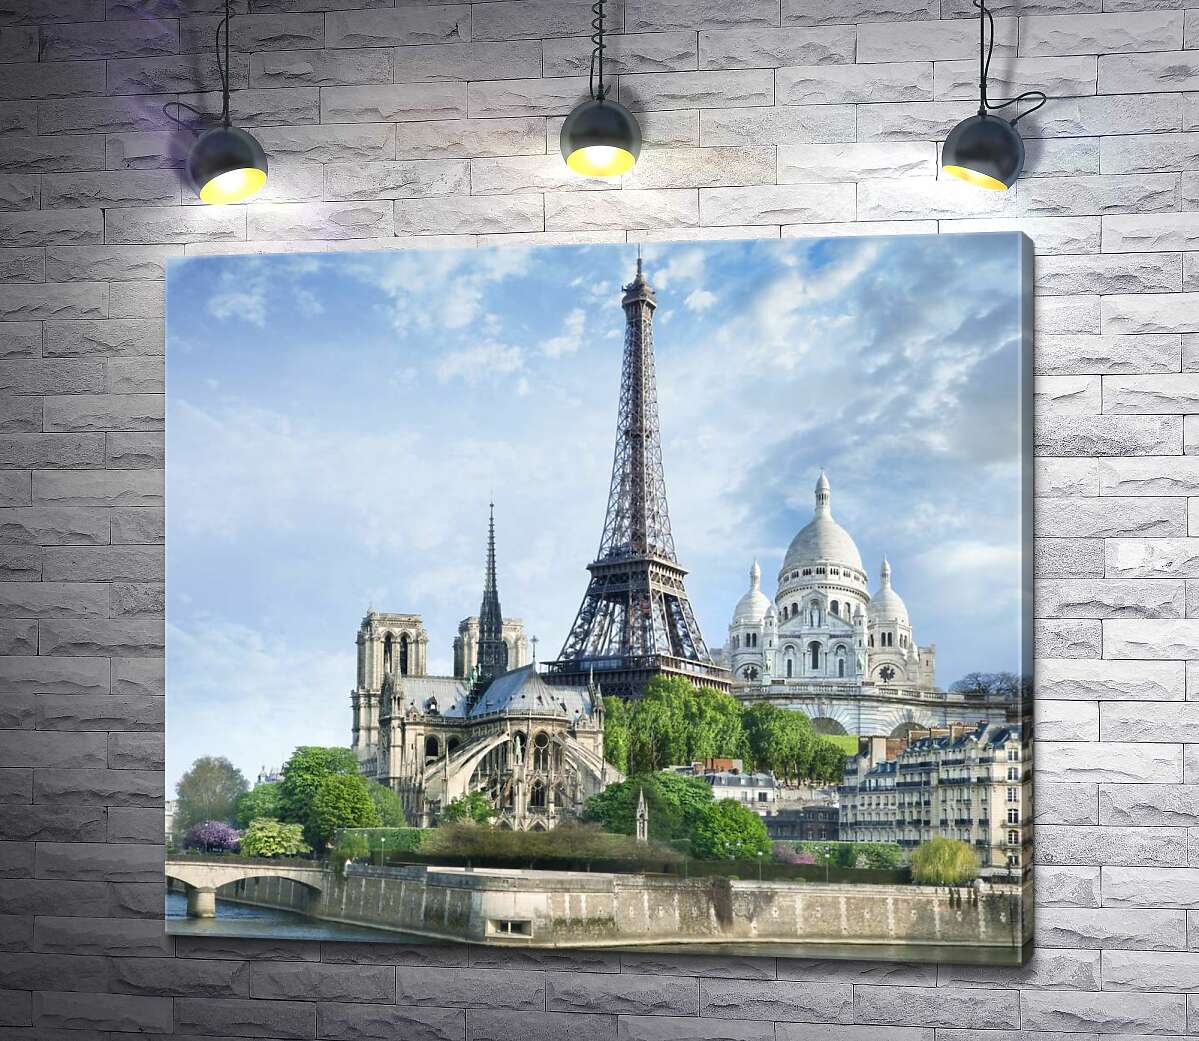 картина Архітектурні твори Парижа: Ейфелева вежа (Eiffel tower), Нотр-Дам-де-Парі (Notre Dame de Paris), базиліка Сакре-Кер (Basilique du Sacre Cœur)